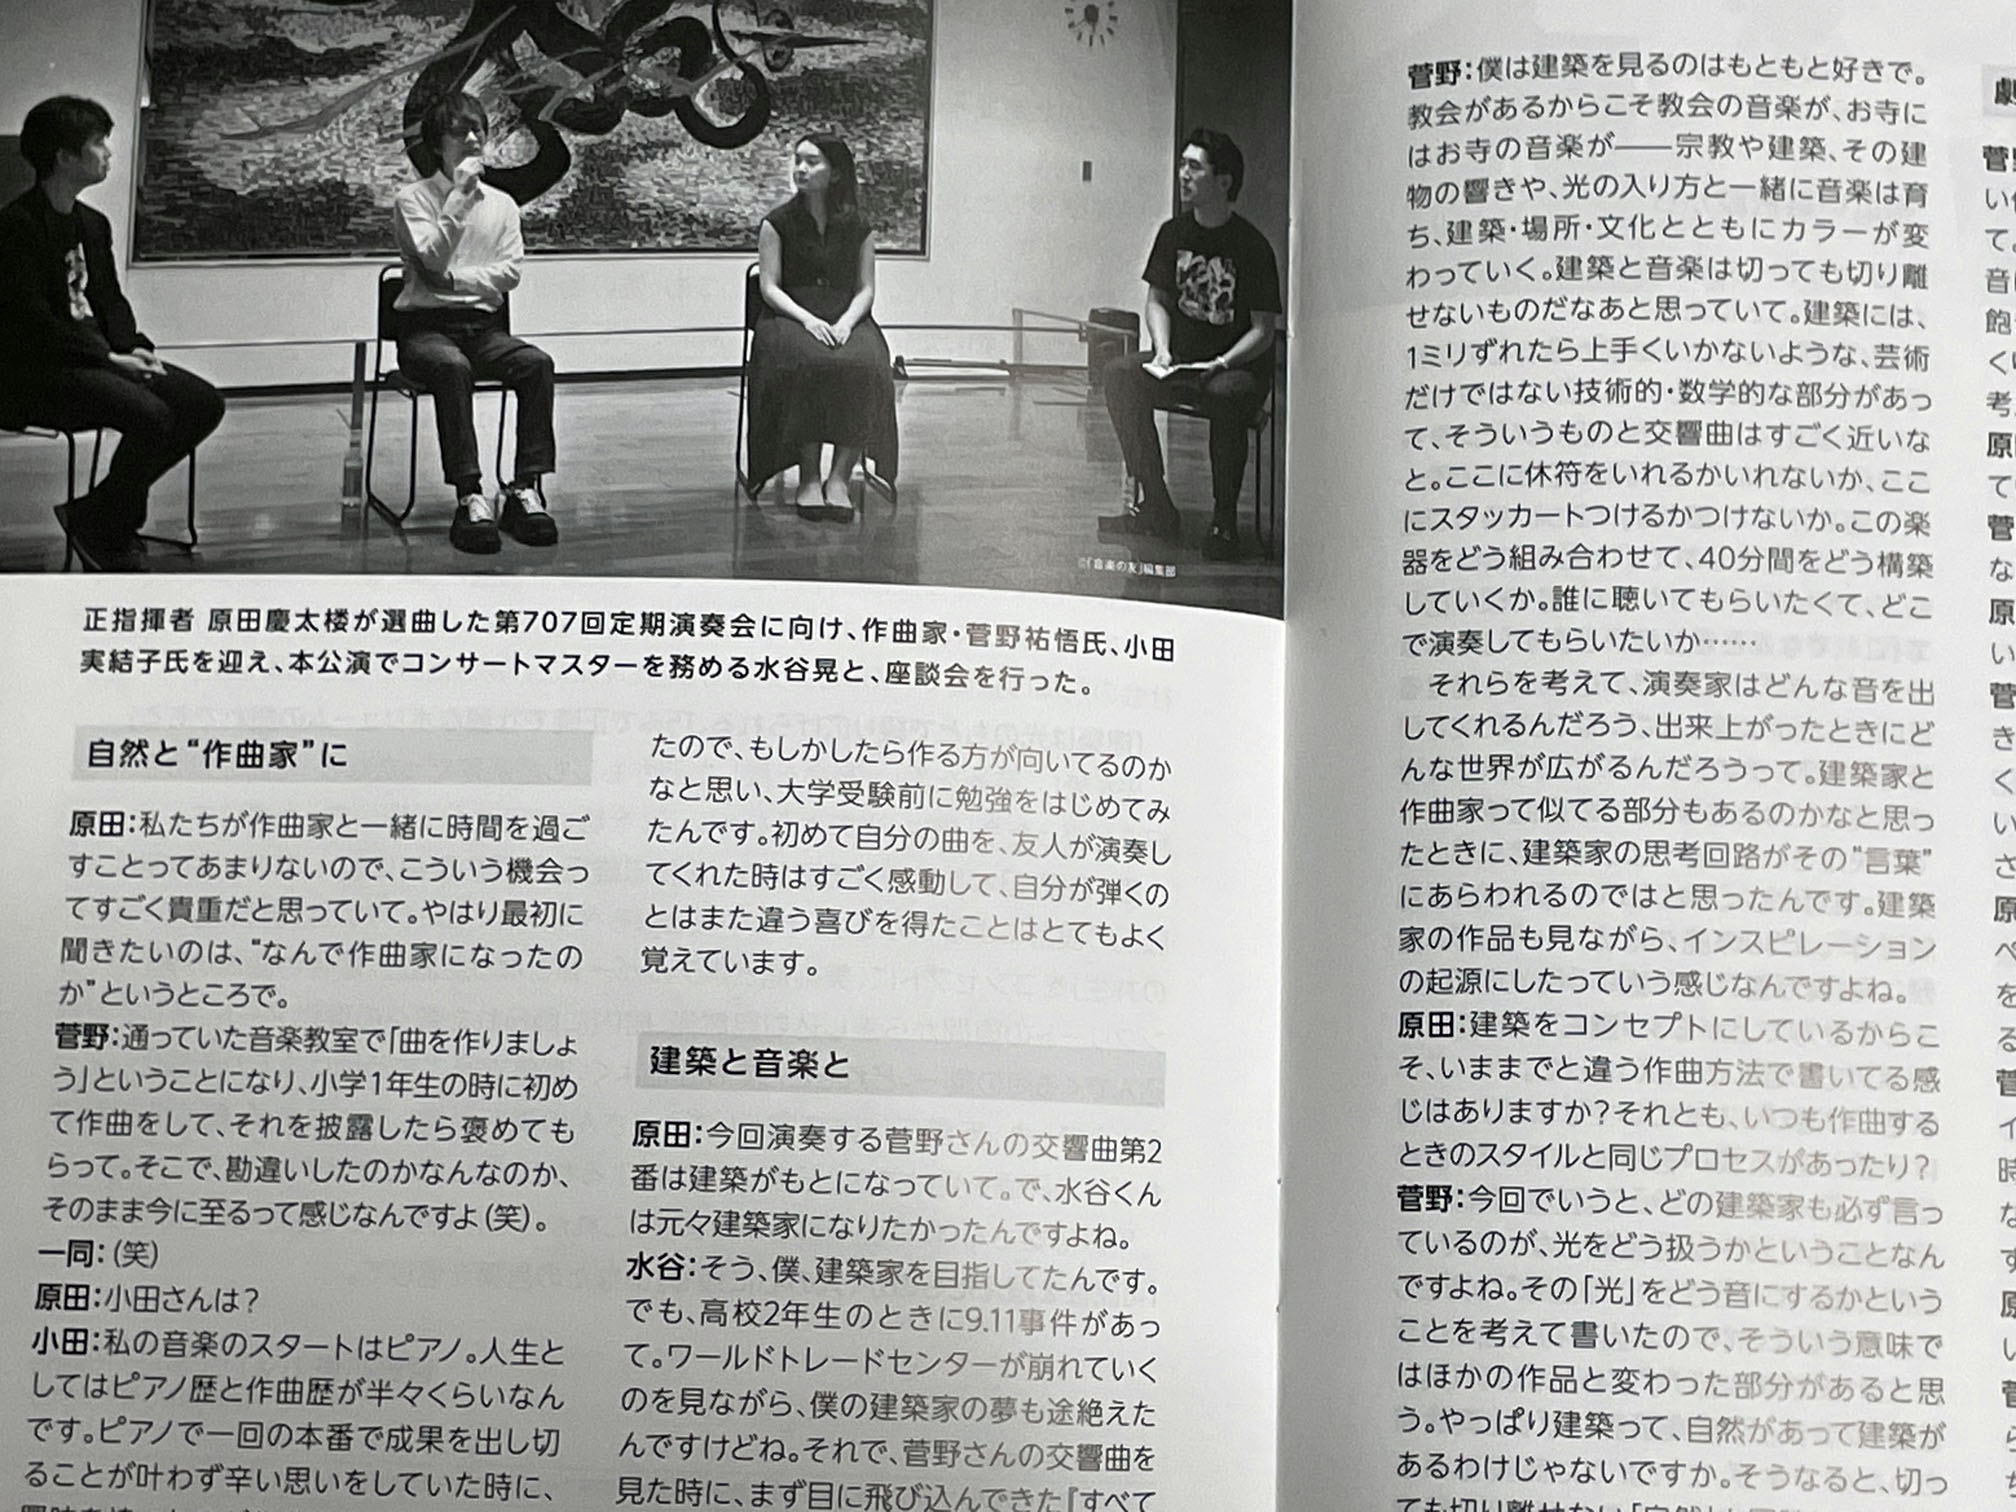 東京交響楽団第707回定期演奏会プログラム・座談会ページ